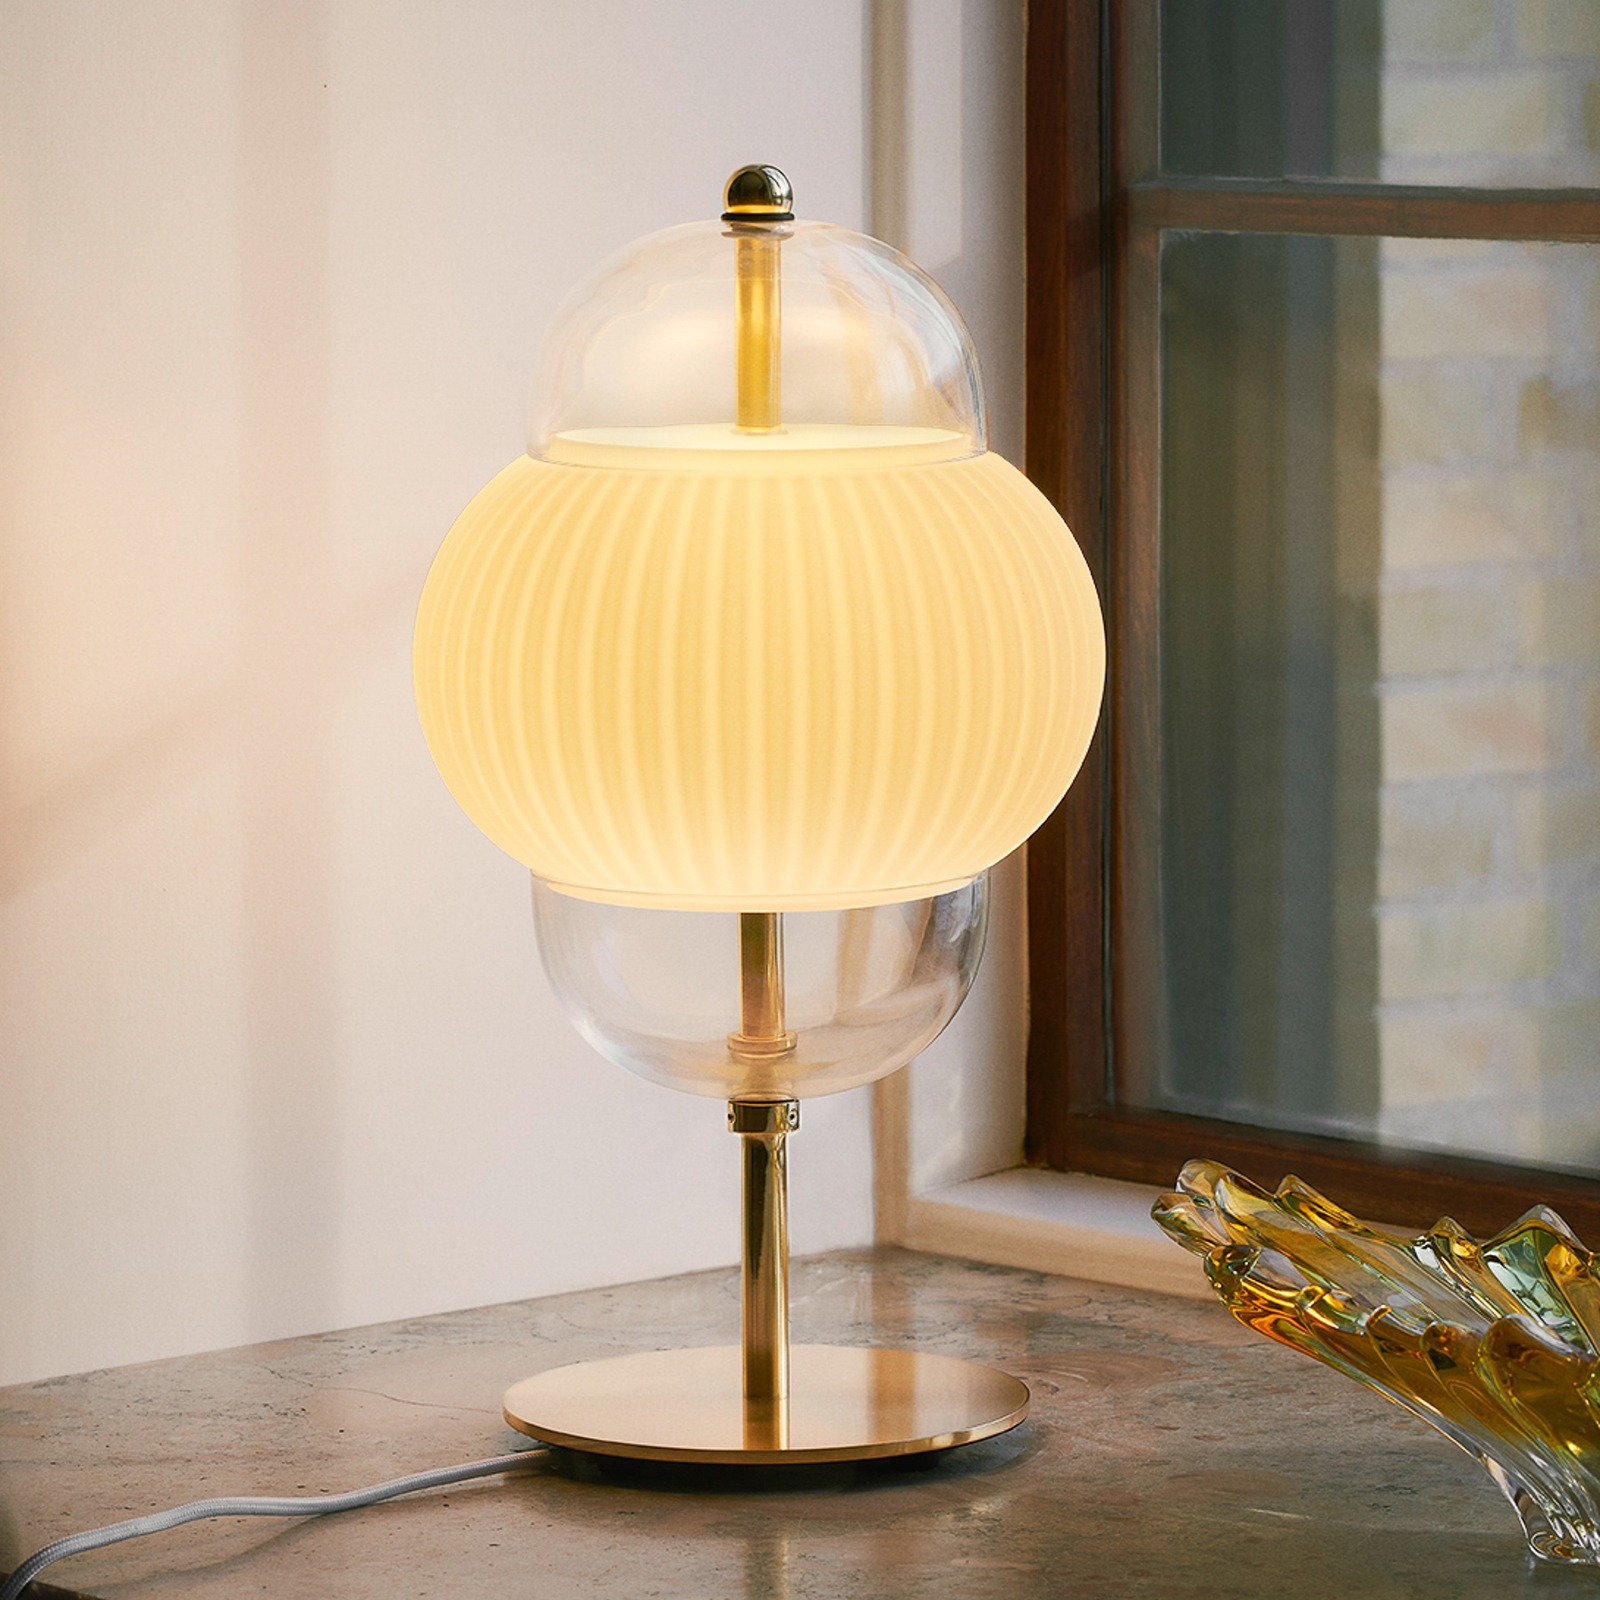 Shahin table lamp, 3-bulb, dimmable, glass, height 43 cm